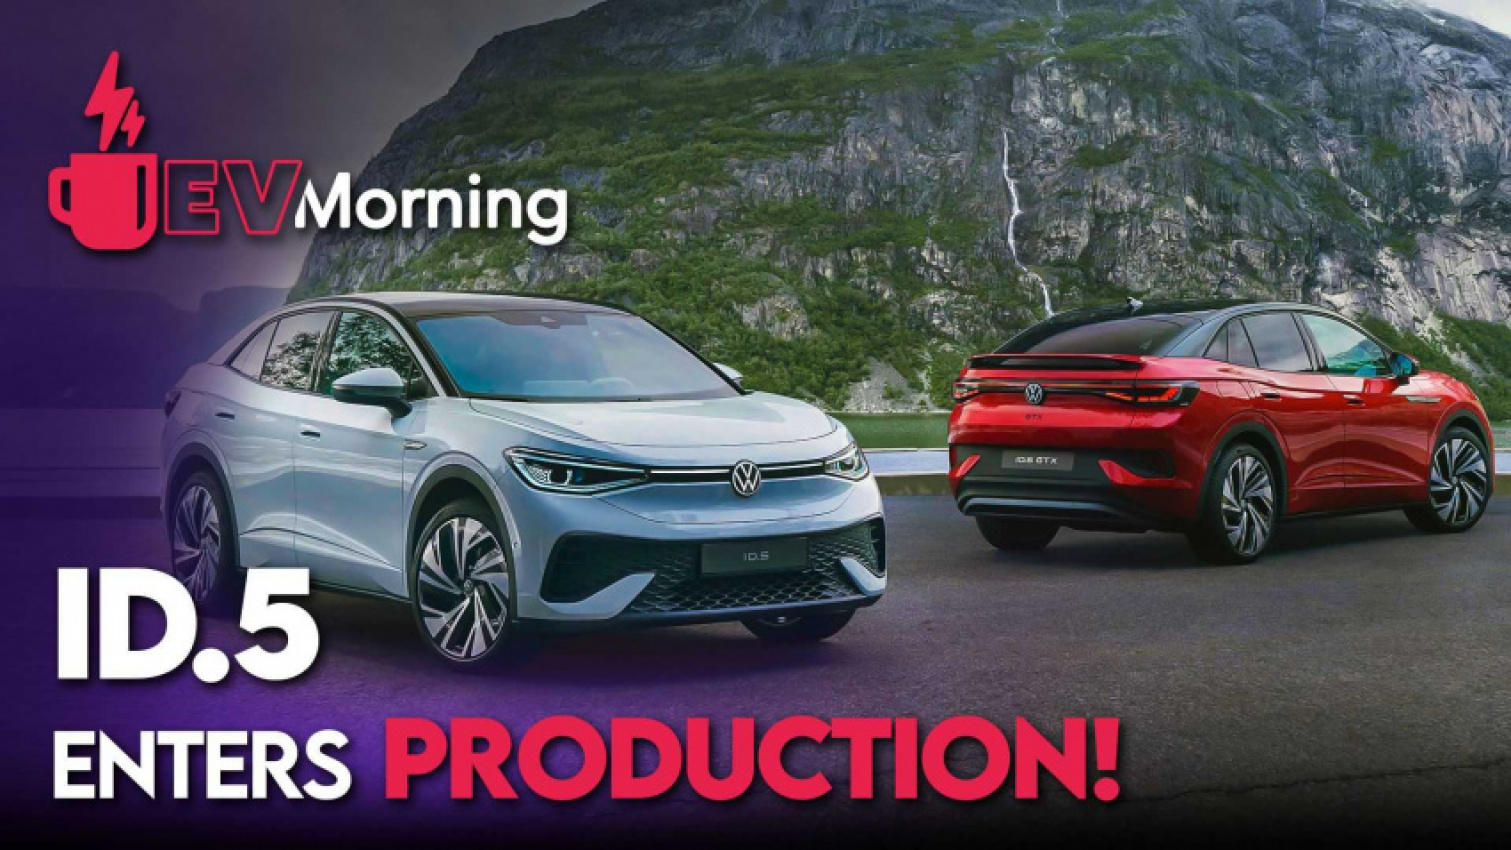 autos, cars, evs, tesla, ev morning news: vw id.5 enters production, tesla megachargers seen, more